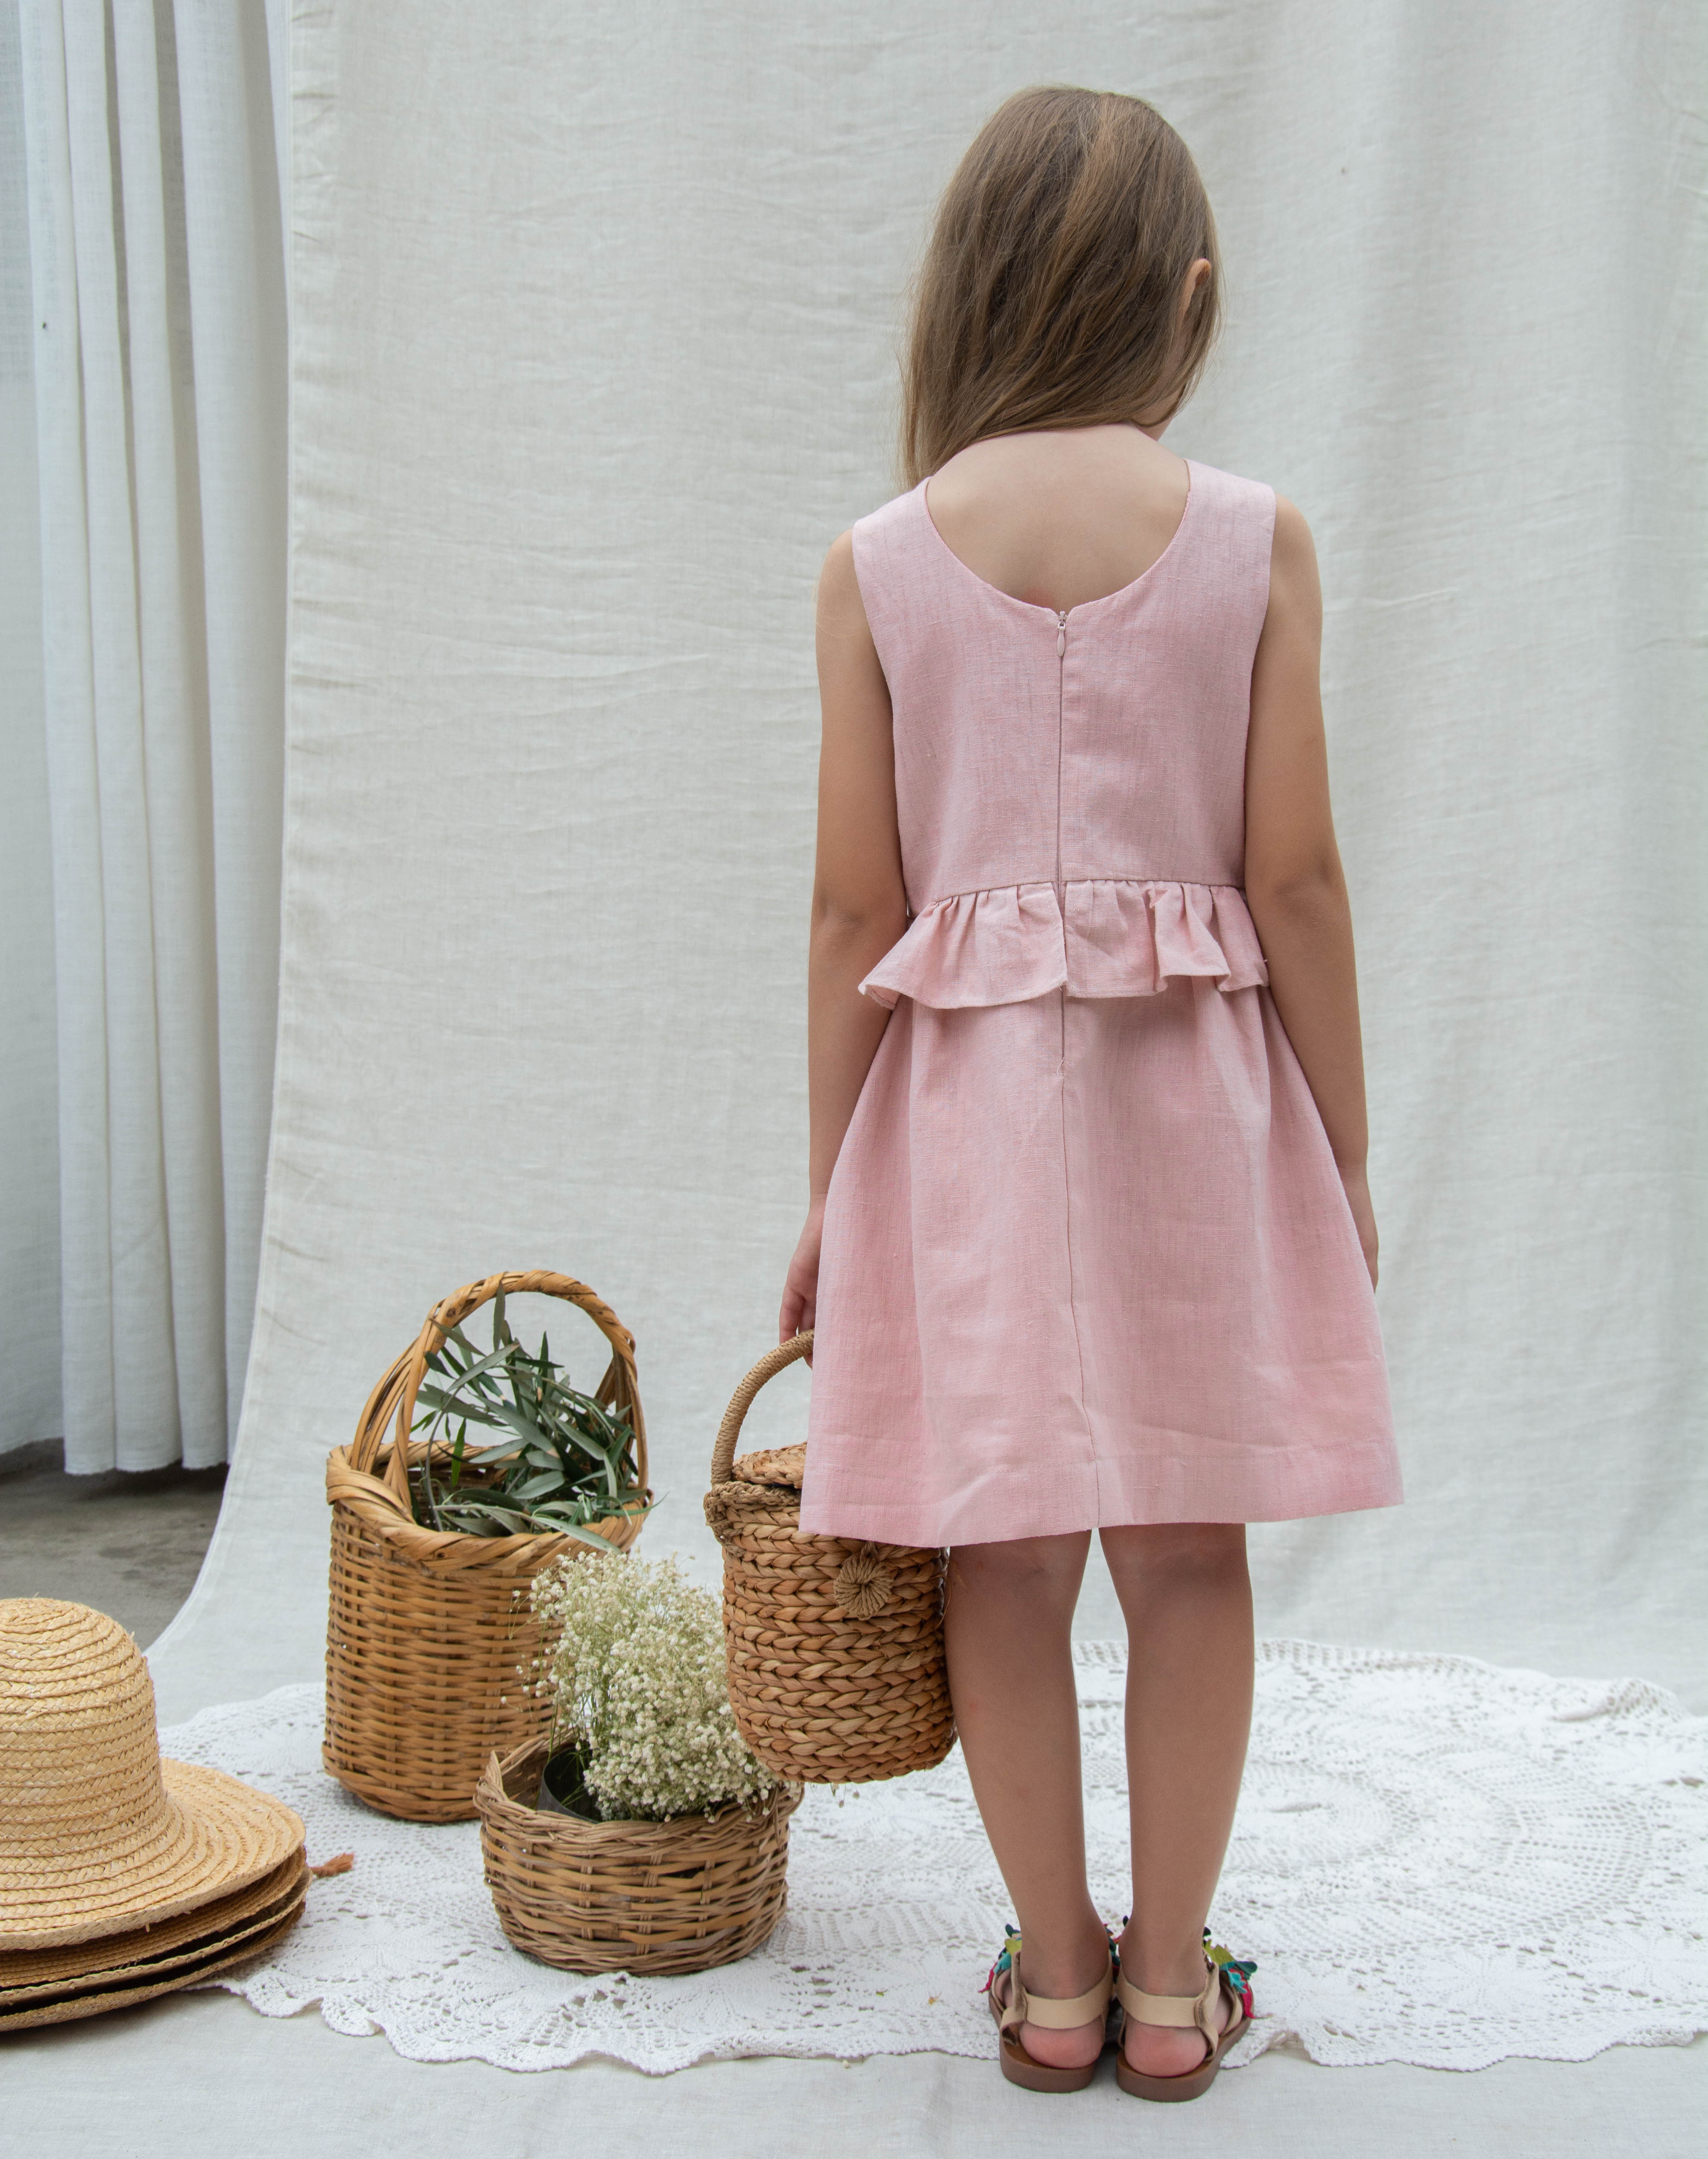                                                                                      Soft Pink Dress